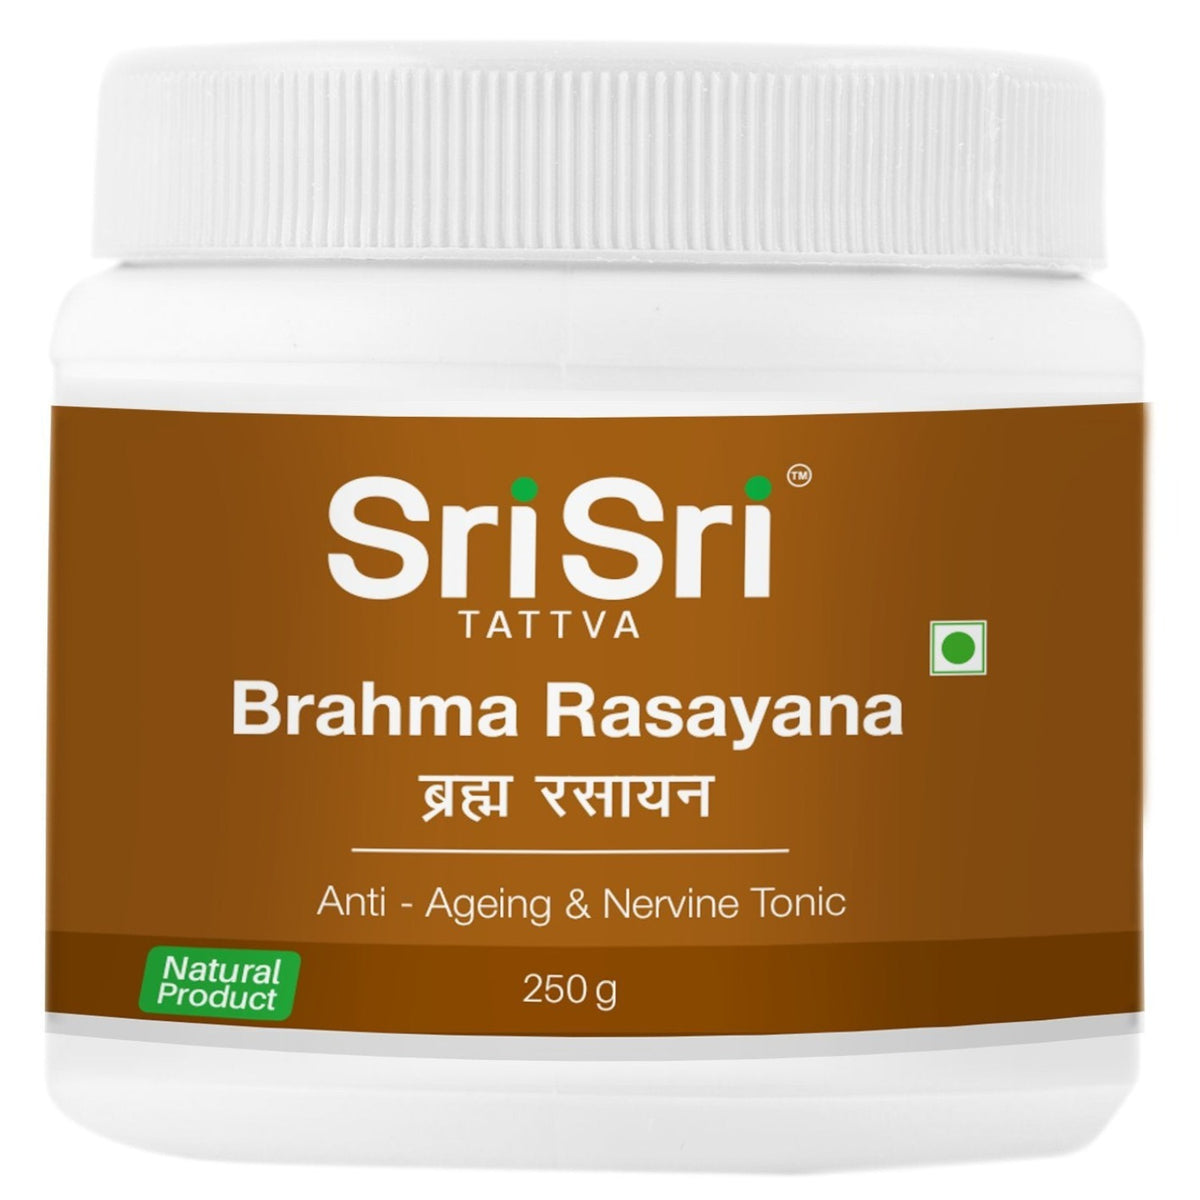 Sri Sri Tattva Ayurvedic Brahma Rasayana Natural Anti-Ageing & Nervine Tonic Paste 250g